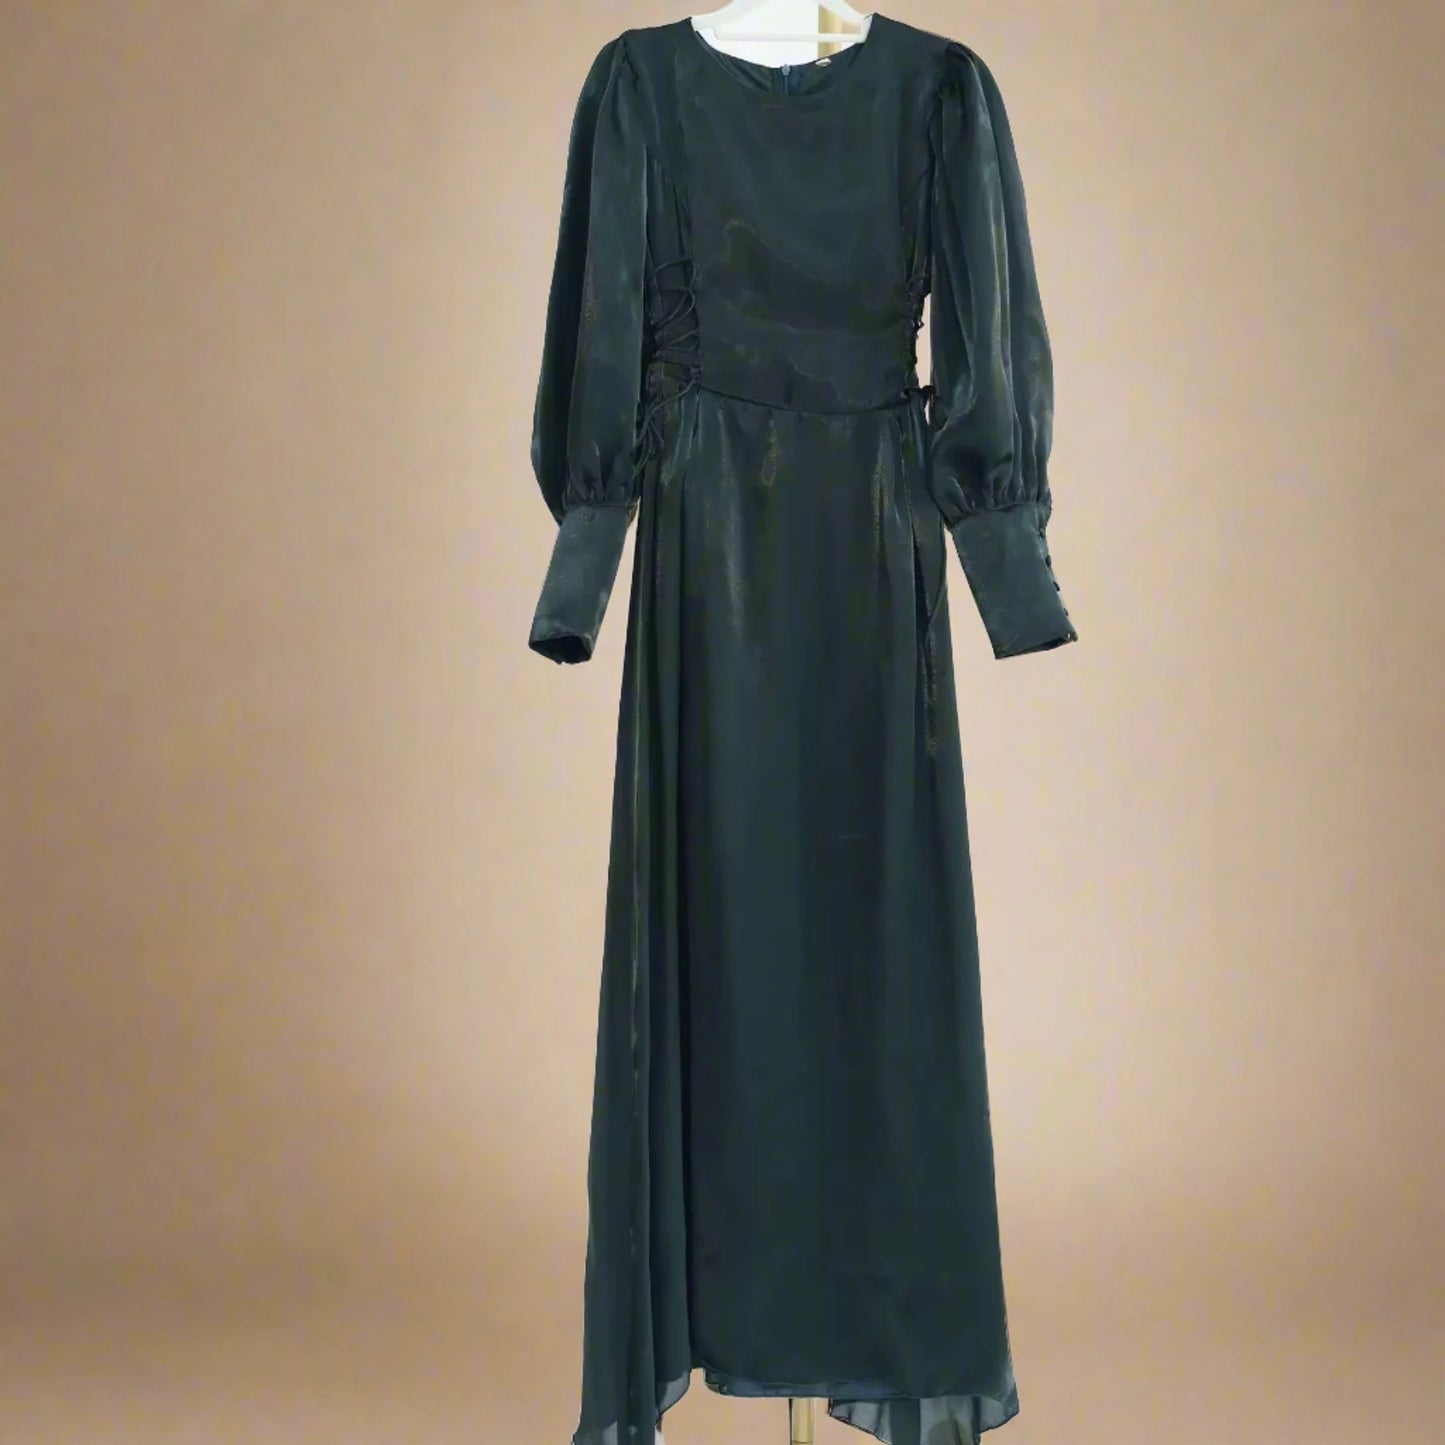 Merida long sleeve modest evening dress